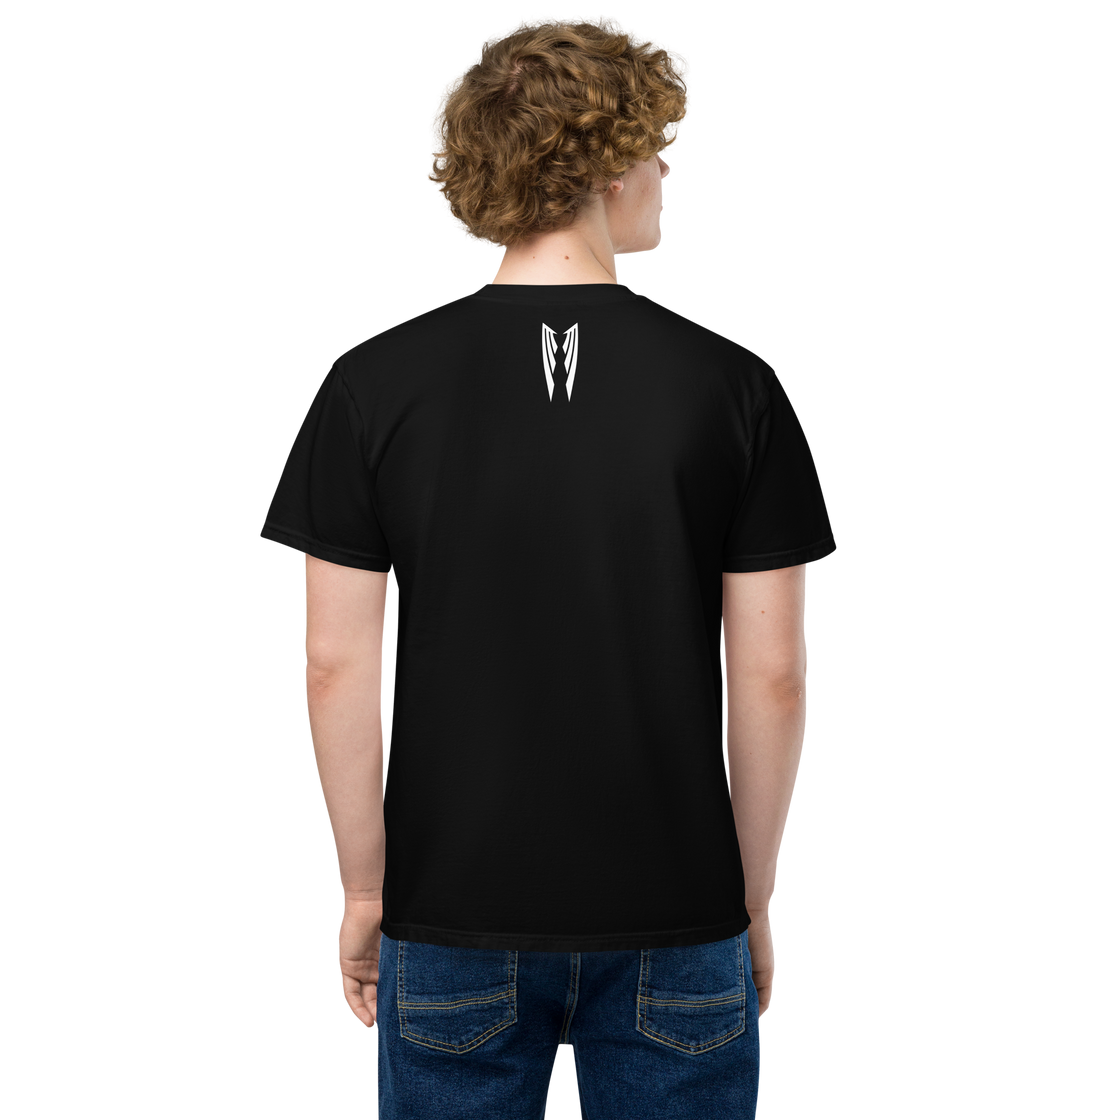 FLY³ garment-dyed pocket t-shirt | Flycube